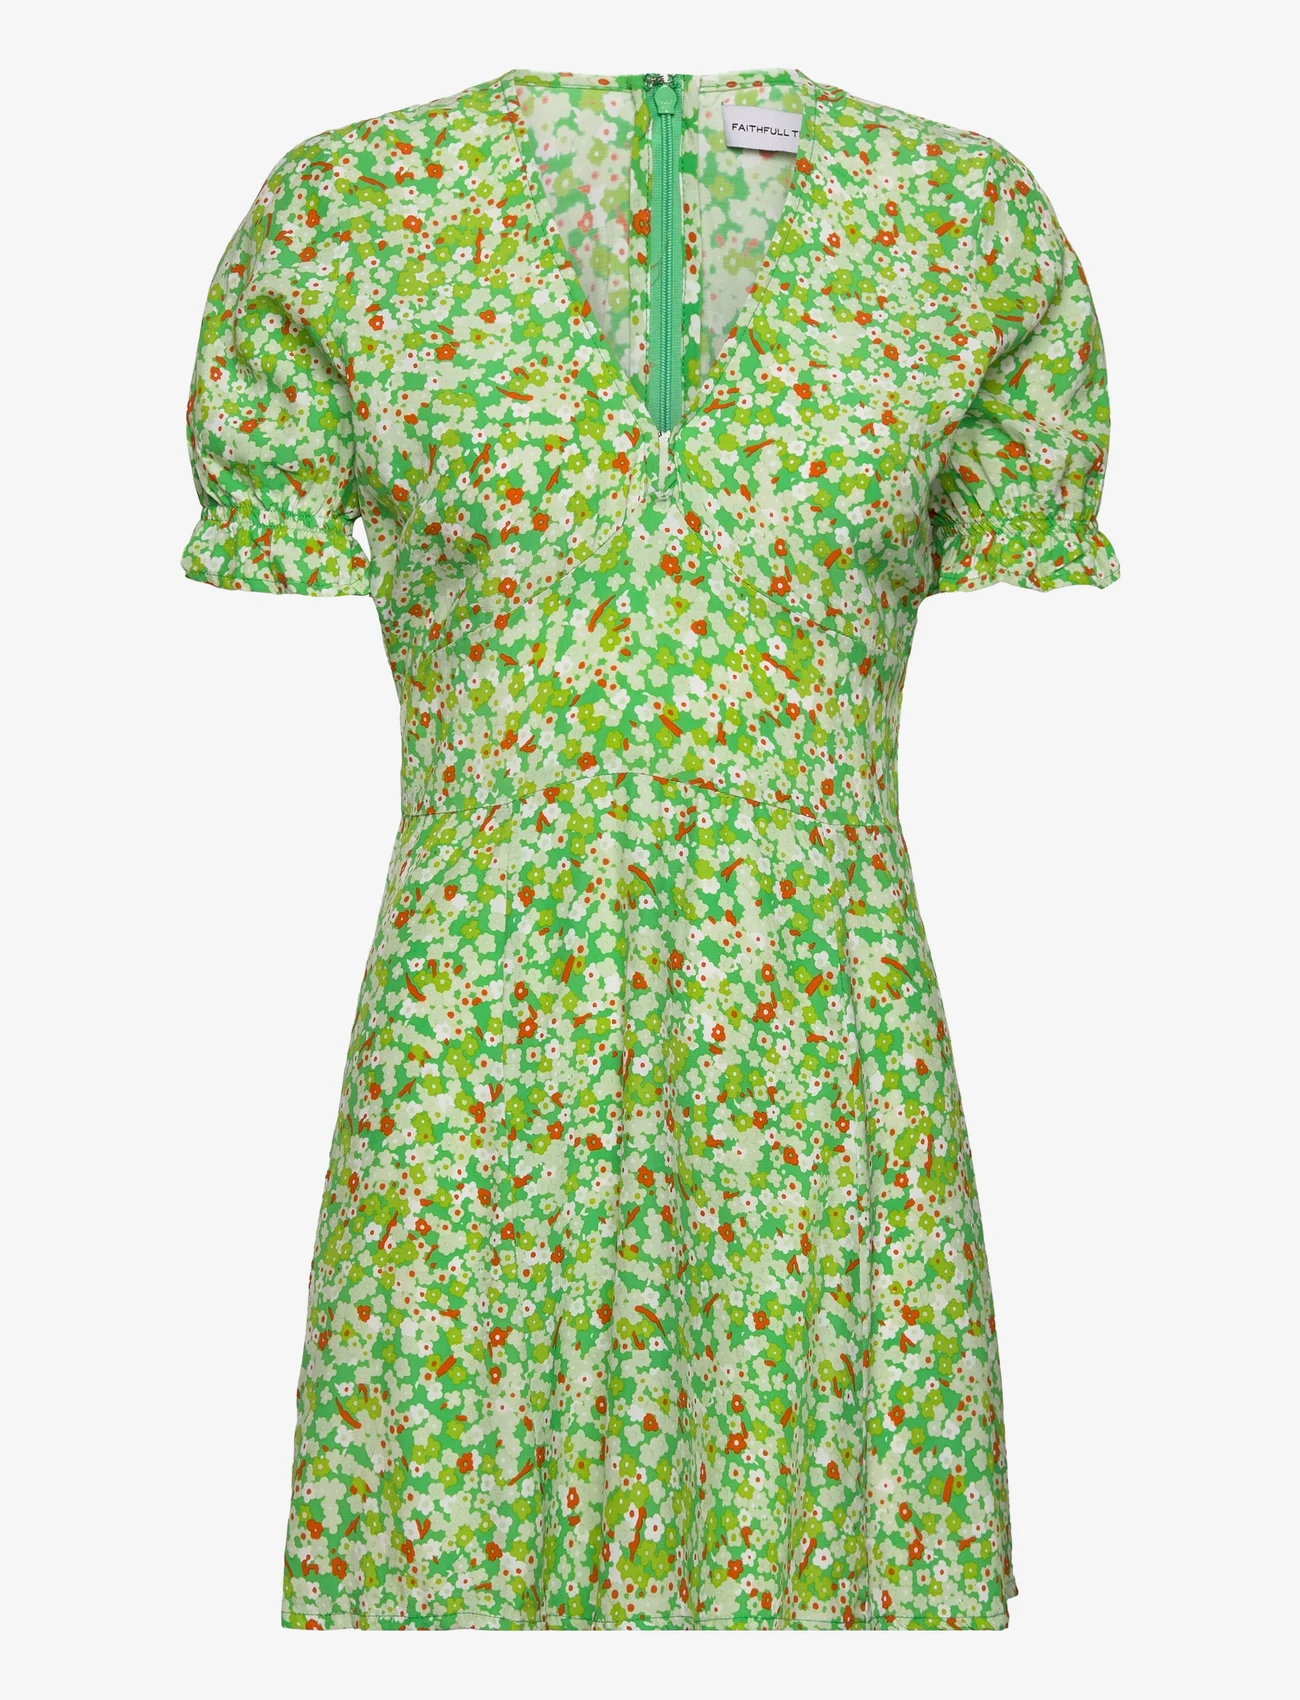 Faithfull The Brand - LA BELLE MINI DRESS - zomerjurken - lou floral print - green - 0